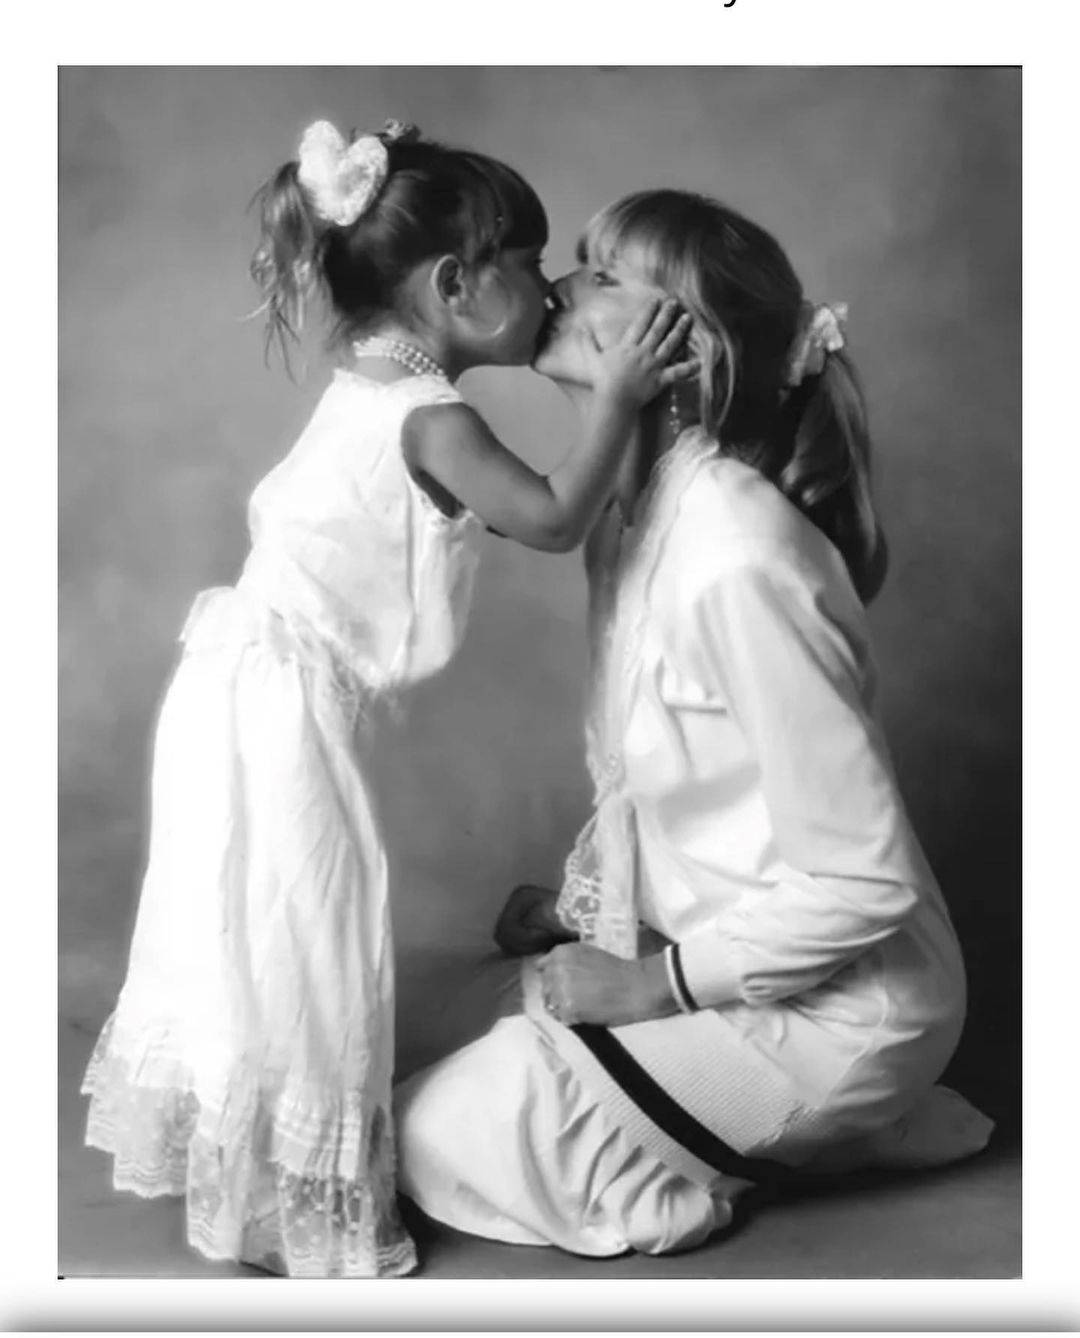 Kći Olivije Newton-John oglasila se prvi put nakon smrti majke, objavila niz dirljivih fotografija